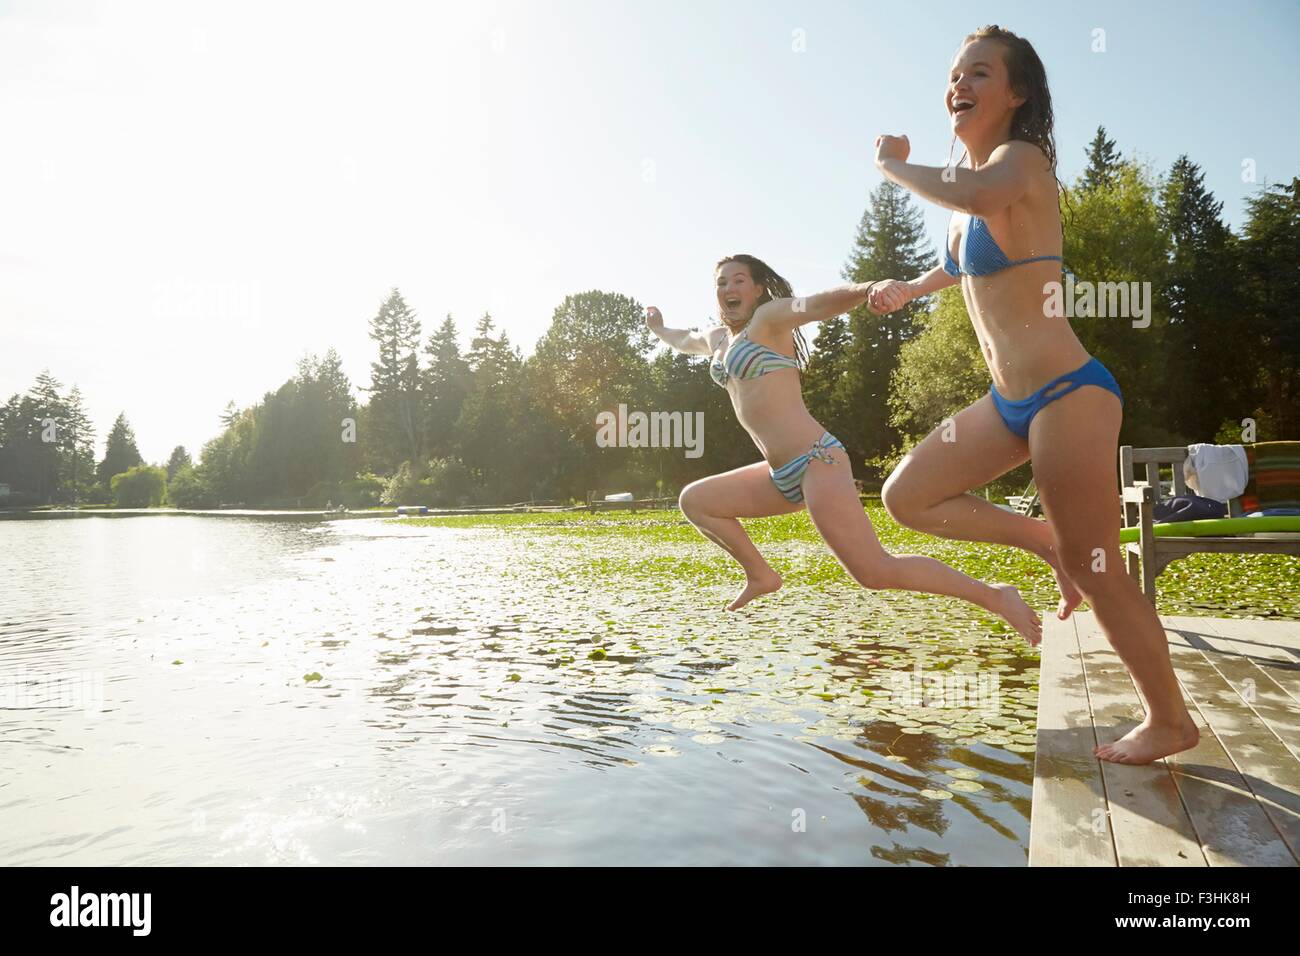 Girls in bikini jumping into lake, Seattle, Washington, USA Stock Photo